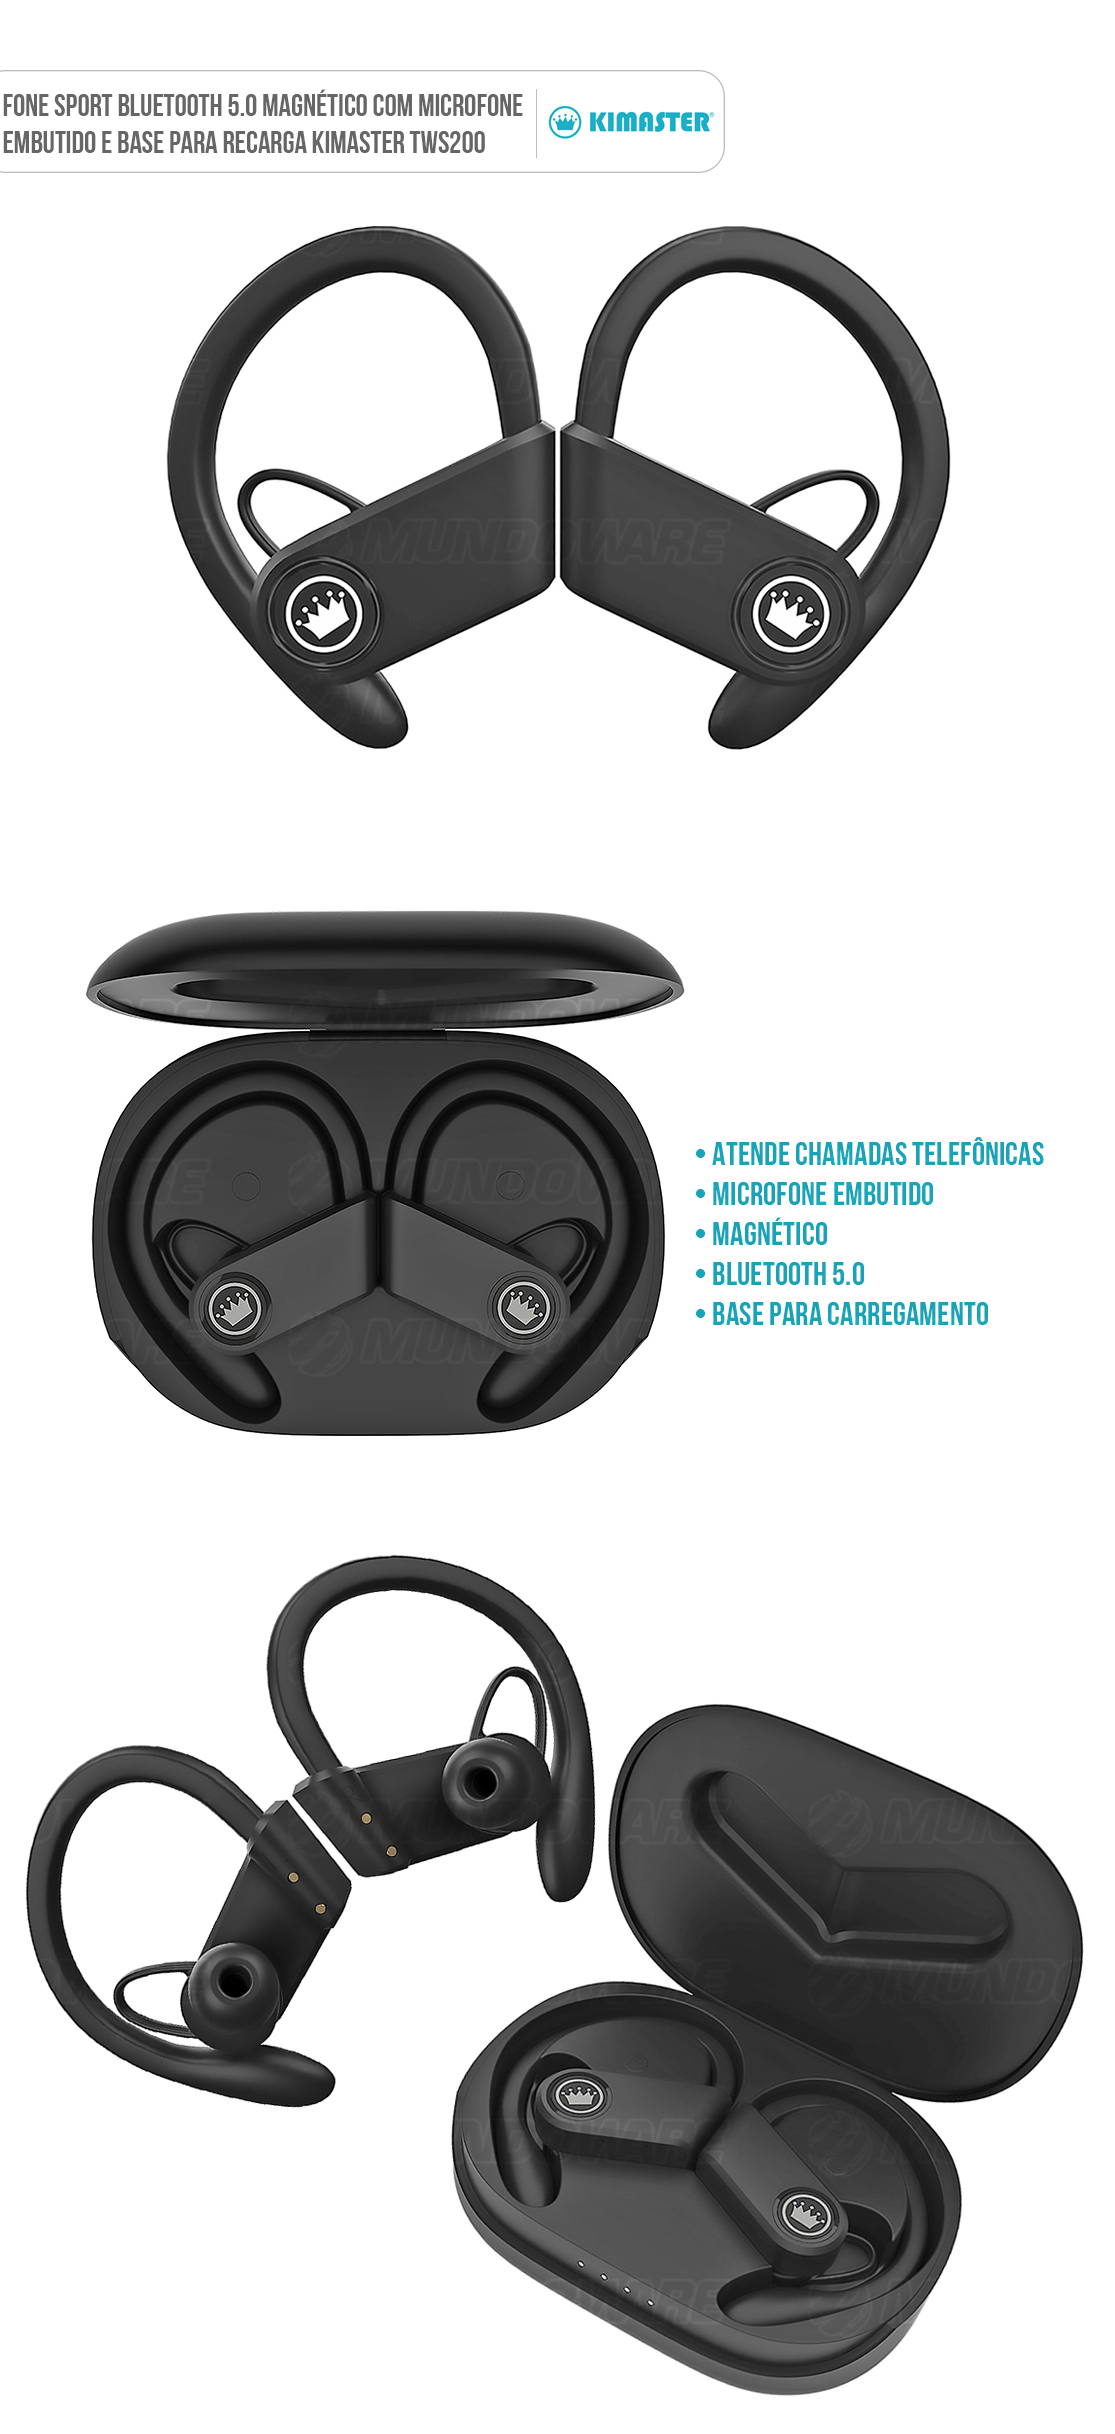 Fone de Ouvido Esportivo Bluetooth 5.0 com Base para Recarga e Microfone para Atender Chamadas Kimaster TWS200